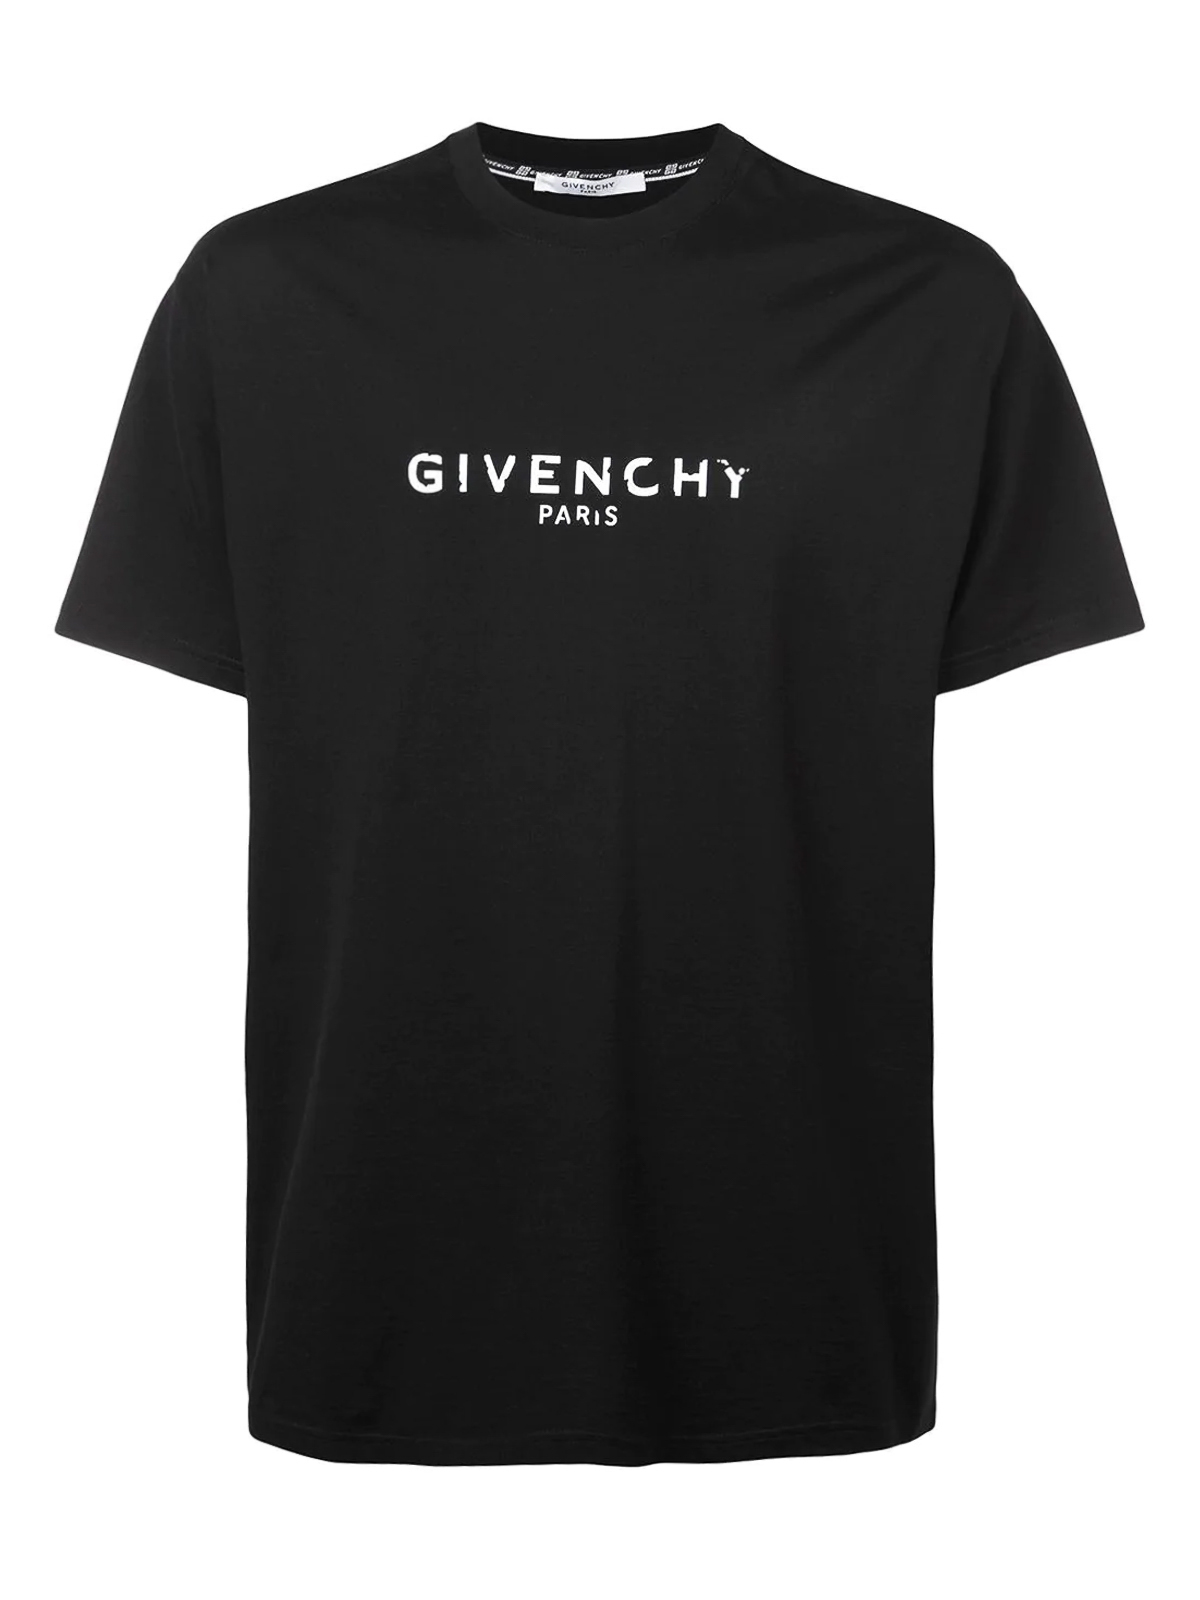 Tシャツ Givenchy - Tシャツ - 黒 - BM70KC3002001 | iKRIX shop online